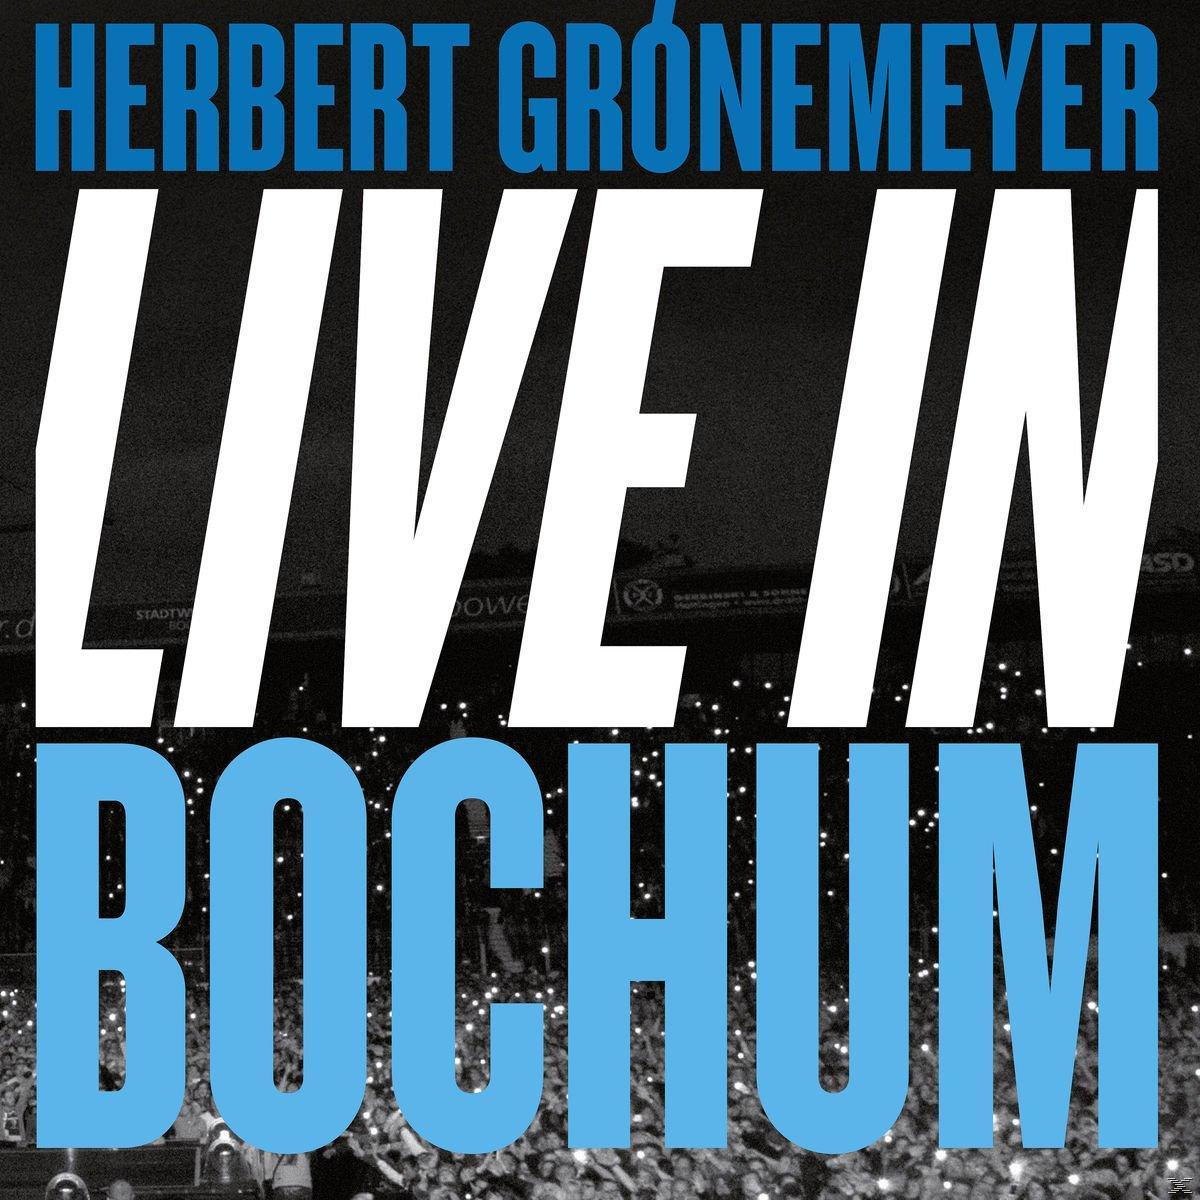 In (Vinyl) - Herbert 19.06.2015 Grönemeyer Bochum - Live